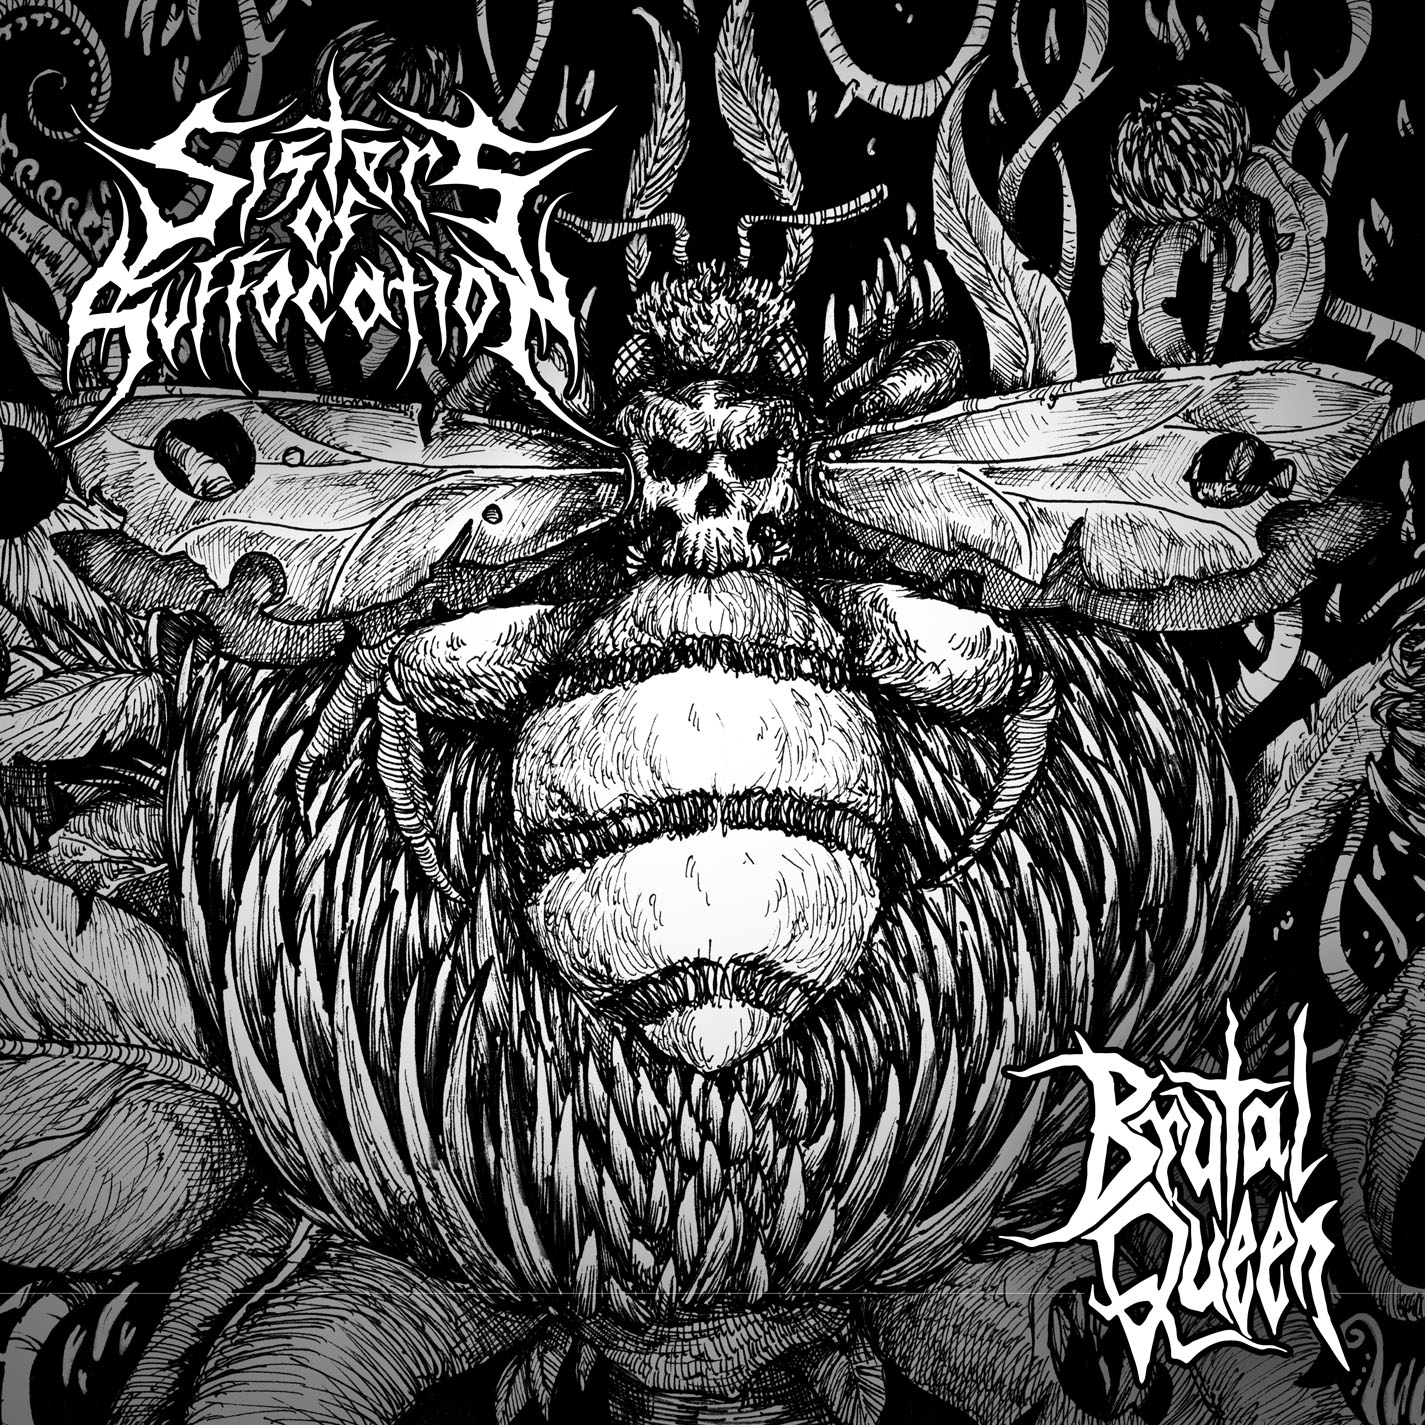 Sisters of Suffocation – Brutal Queen